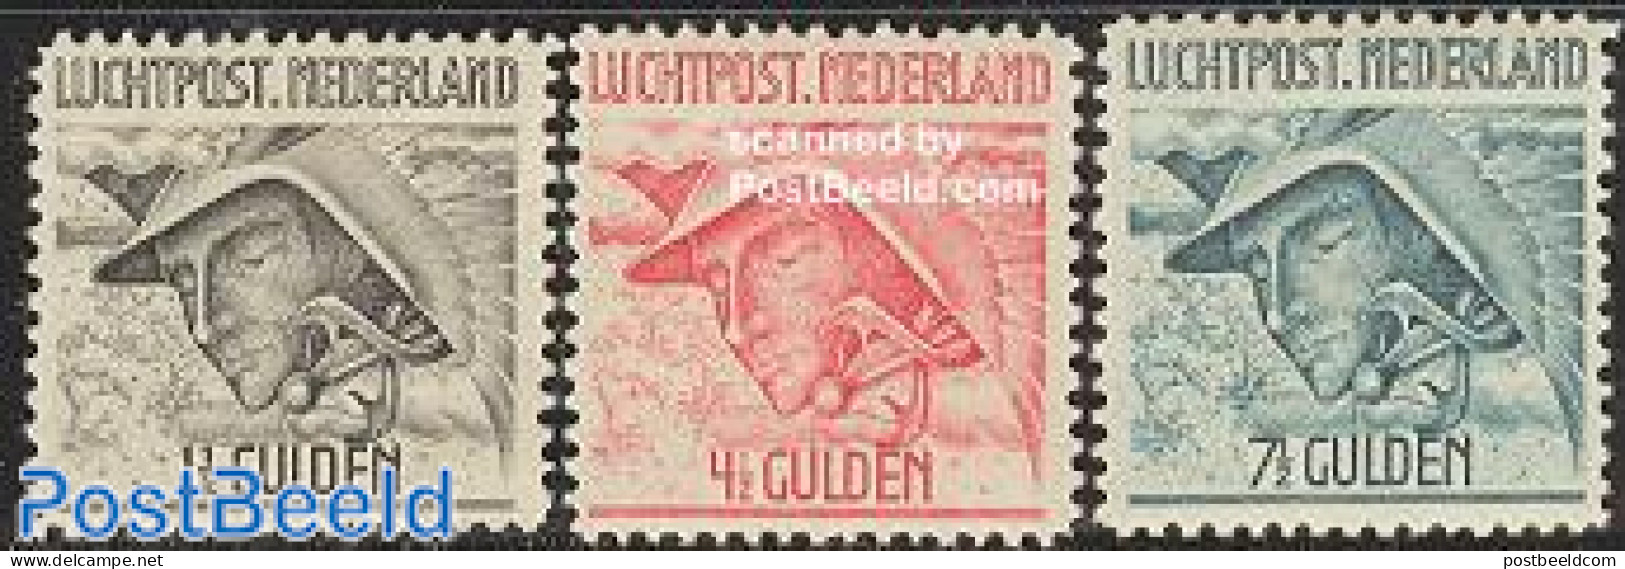 Netherlands 1929 Airmail, Mercurius 3v, Mint NH, Religion - Greek & Roman Gods - Luchtpost